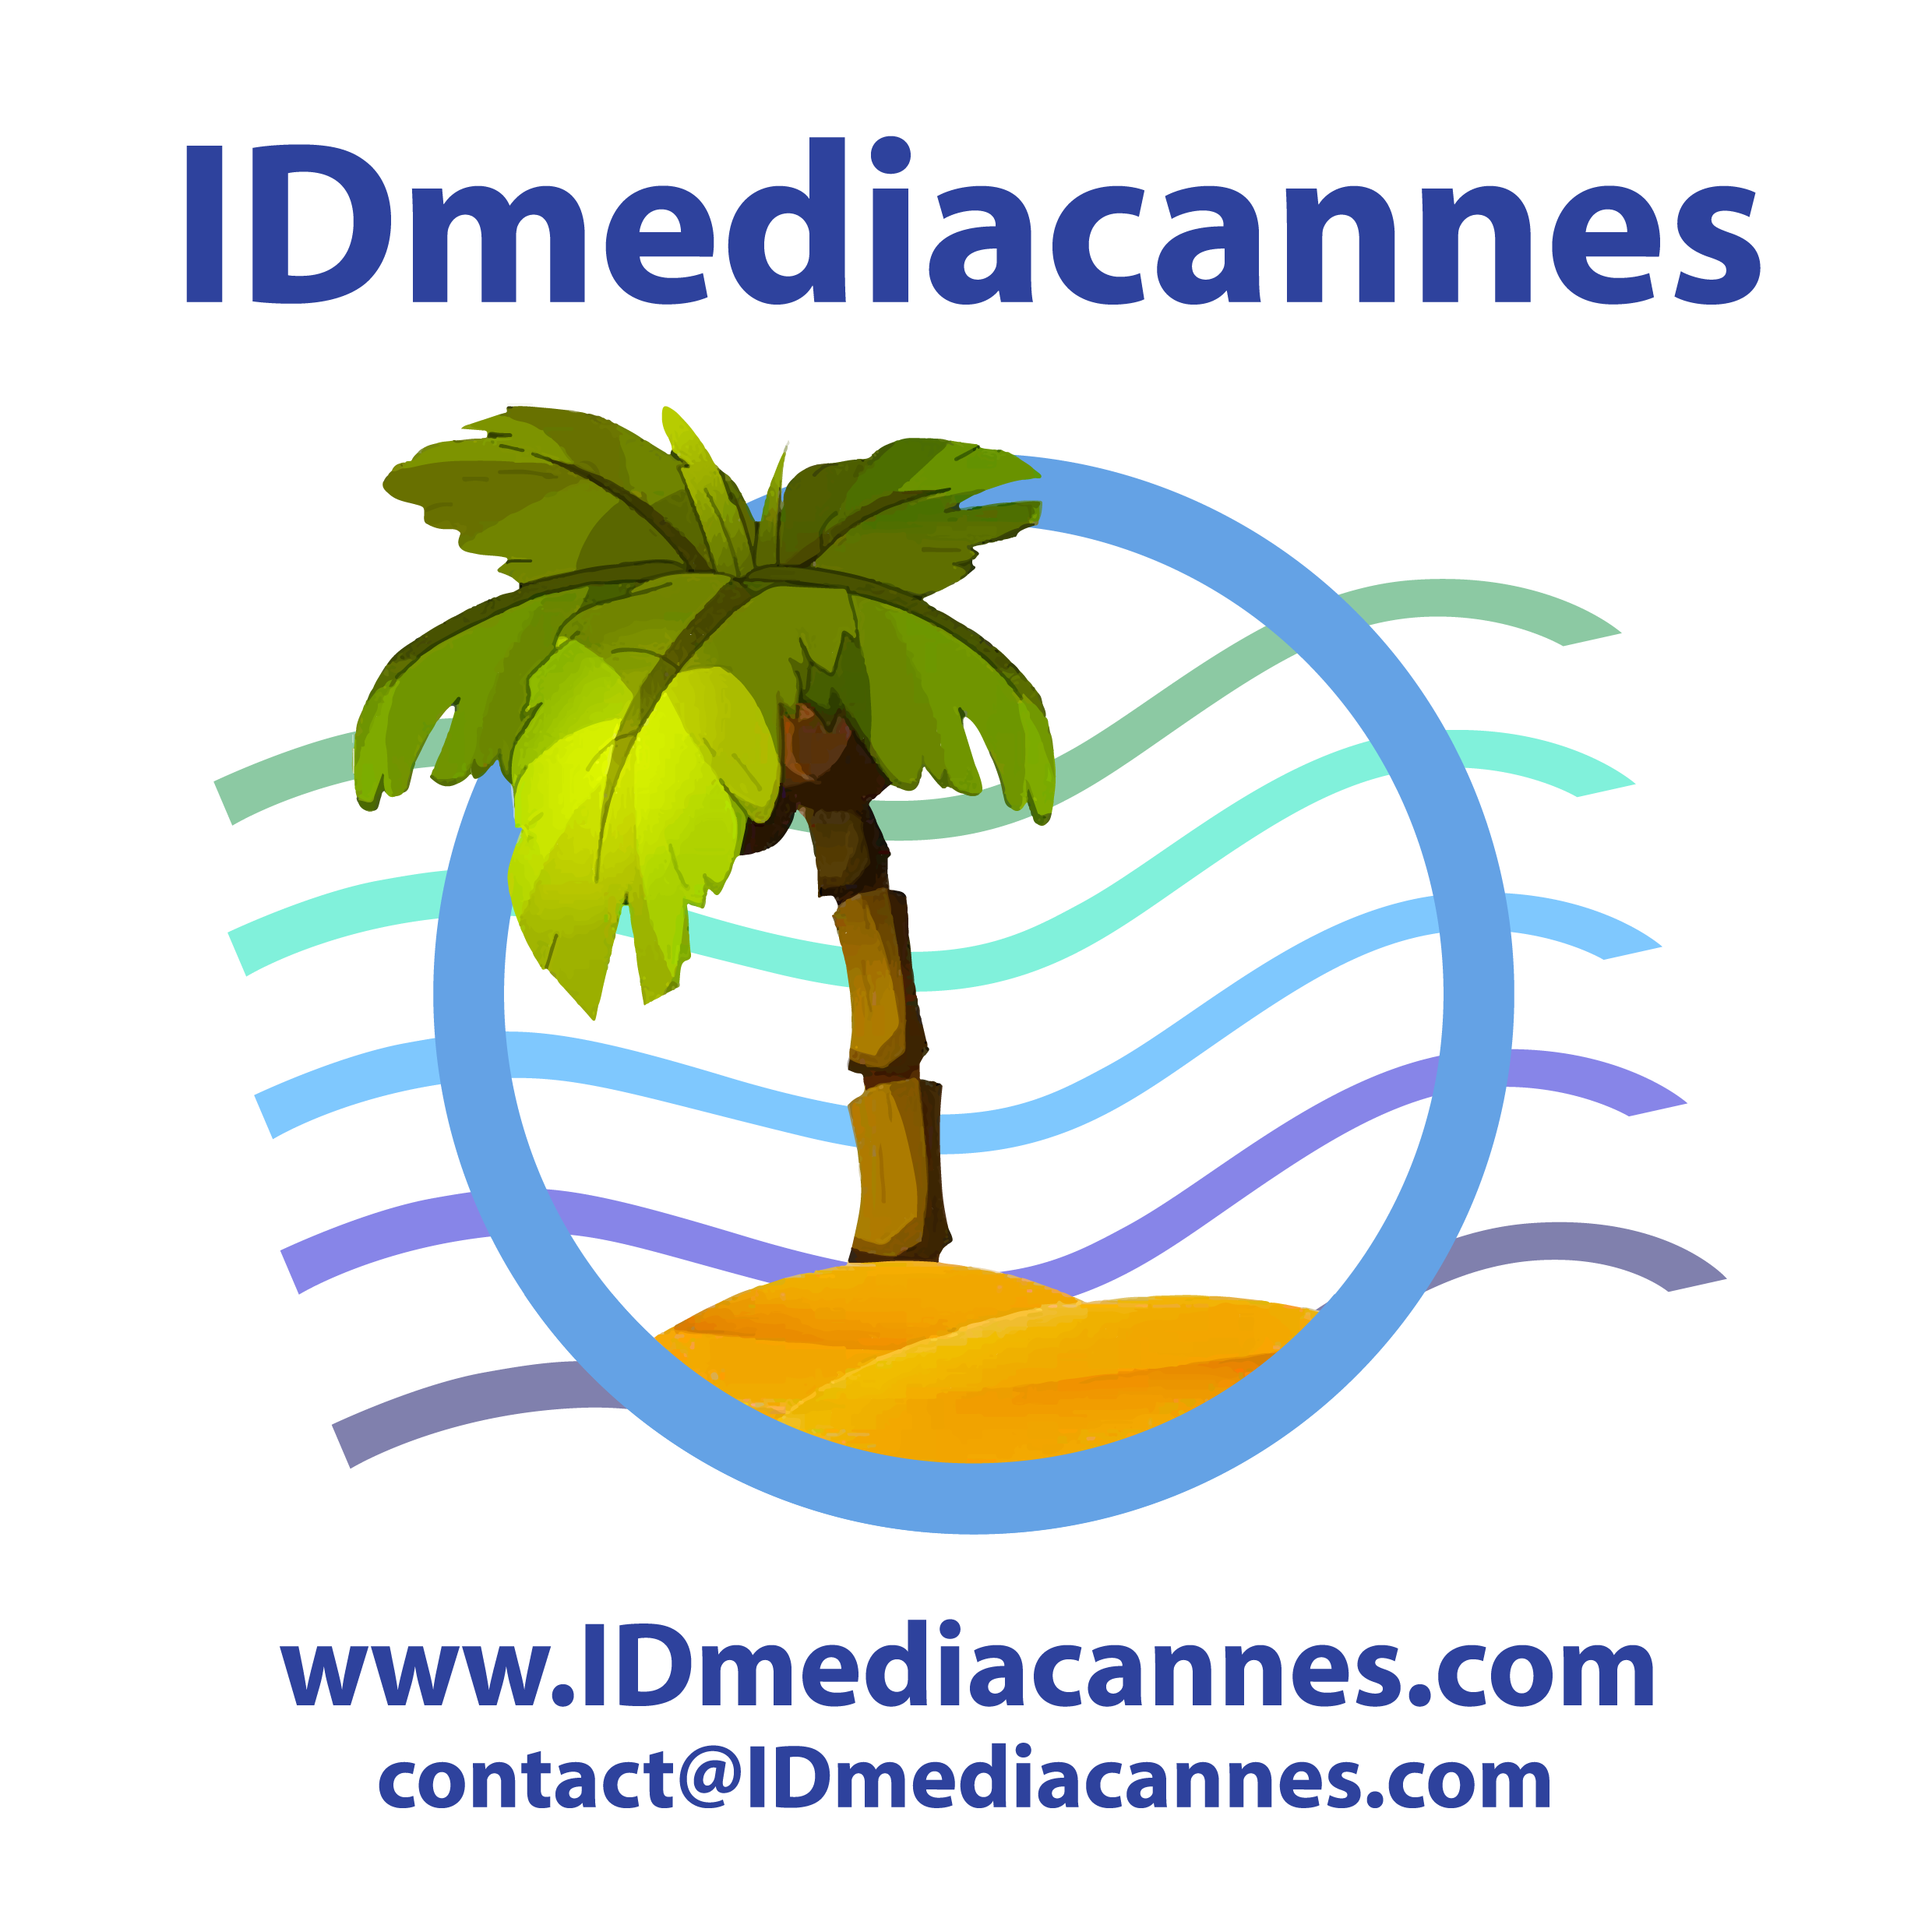 IDmediacannes